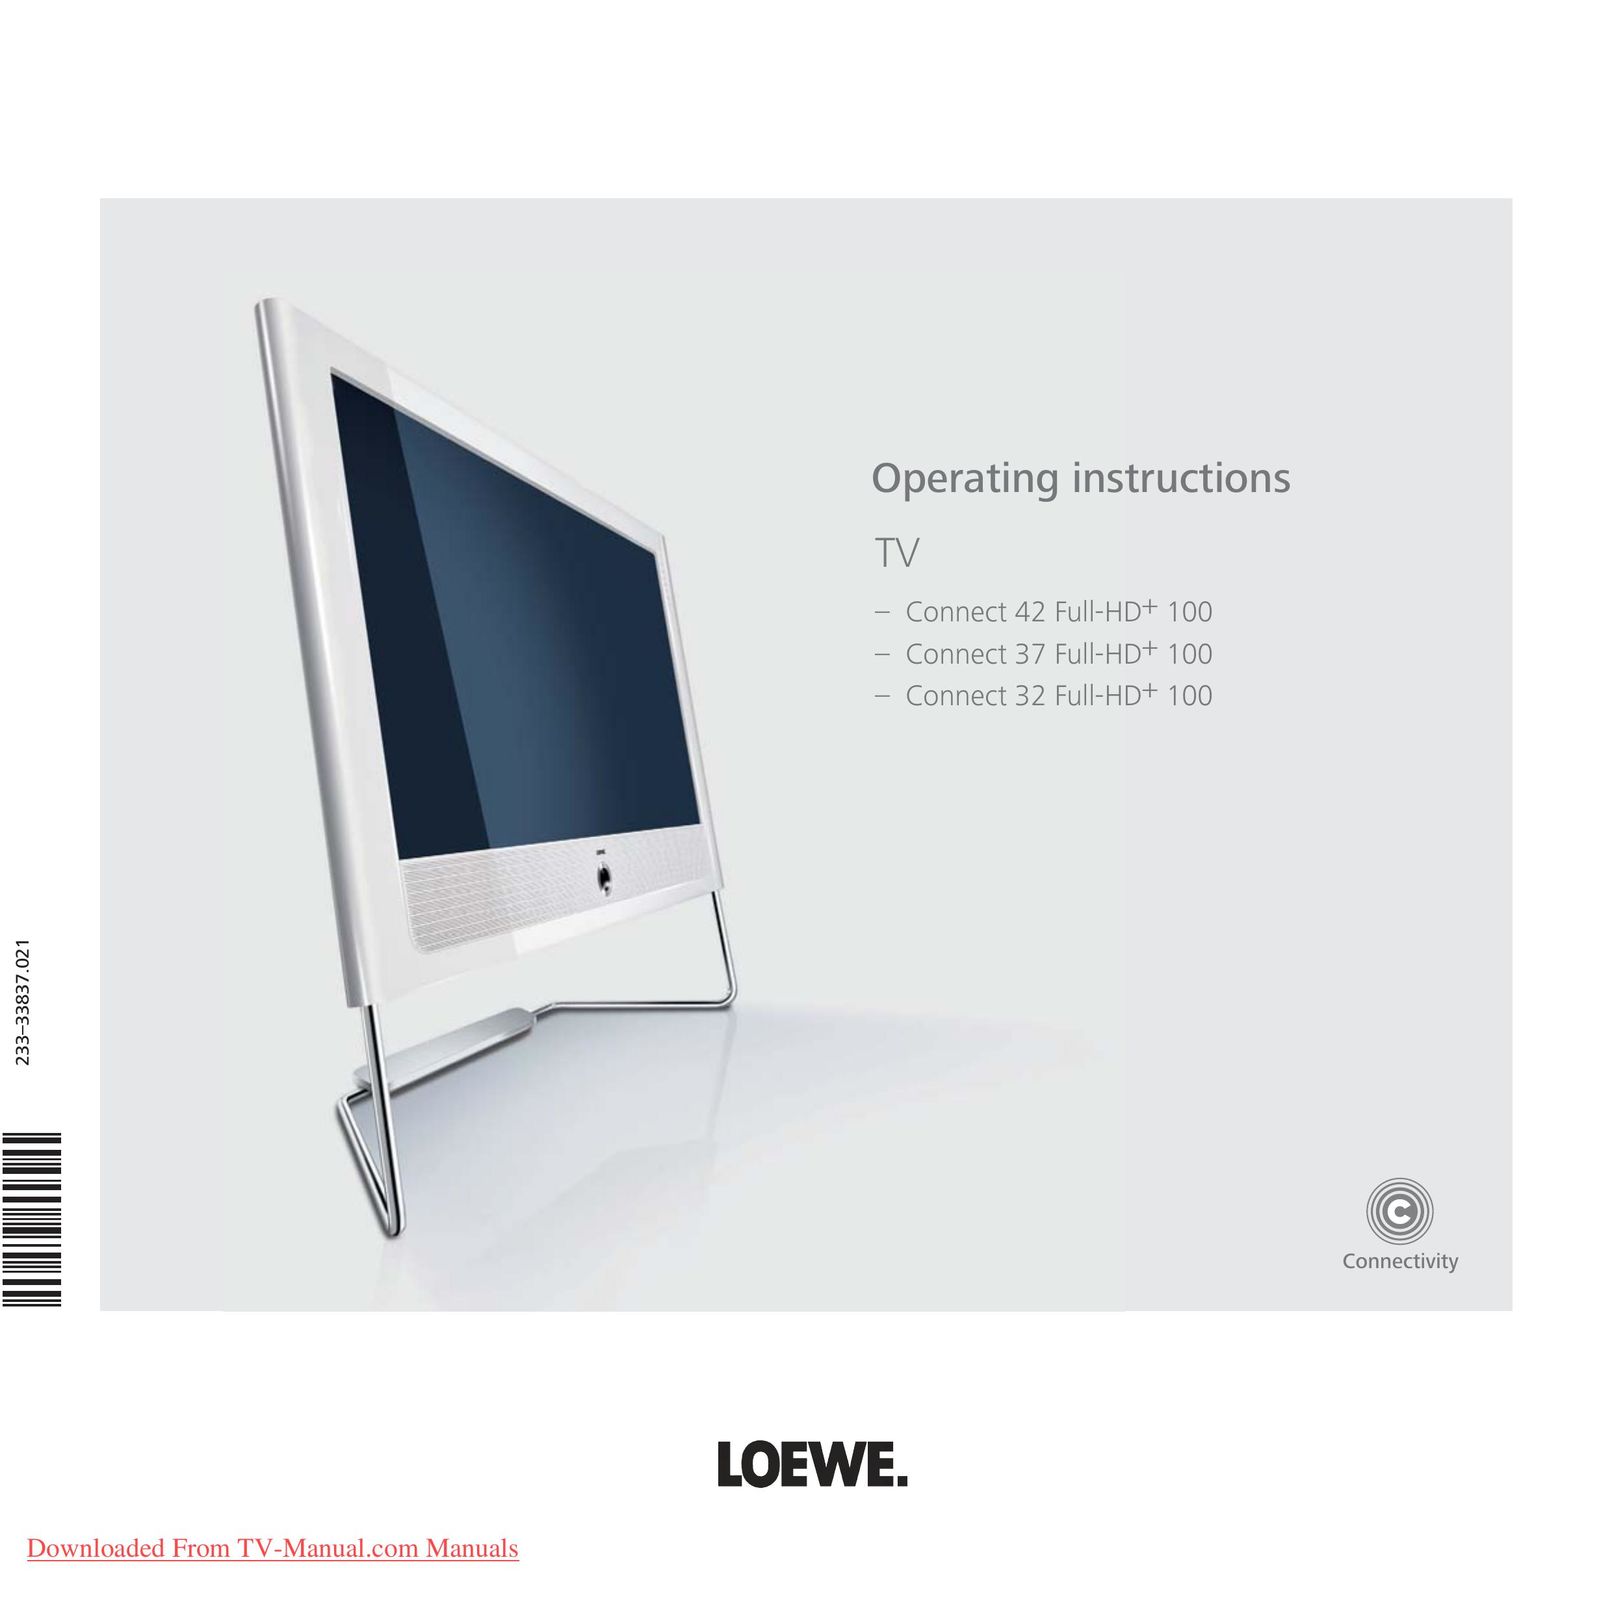 Loewe Connect 37 Full-HD+ 100 TV Antenna User Manual